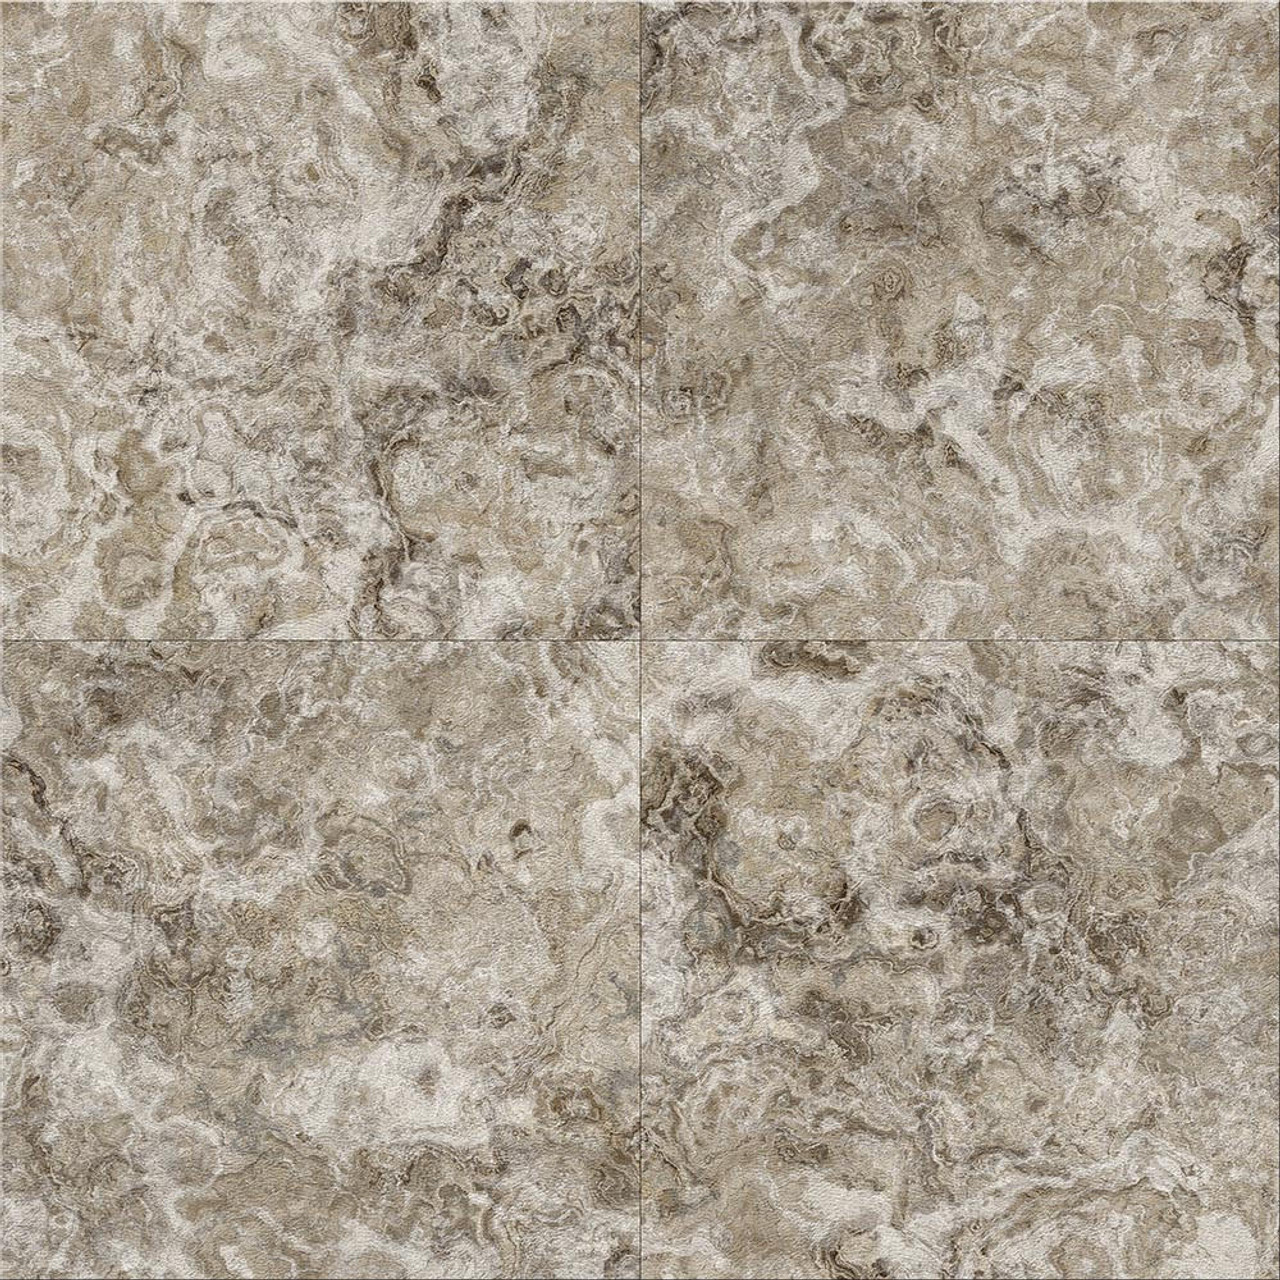 Perfection Floor Tile Natural Stone - Breccia Crema or 6 Tiles/ Case or 16.62 SQFT/ Case